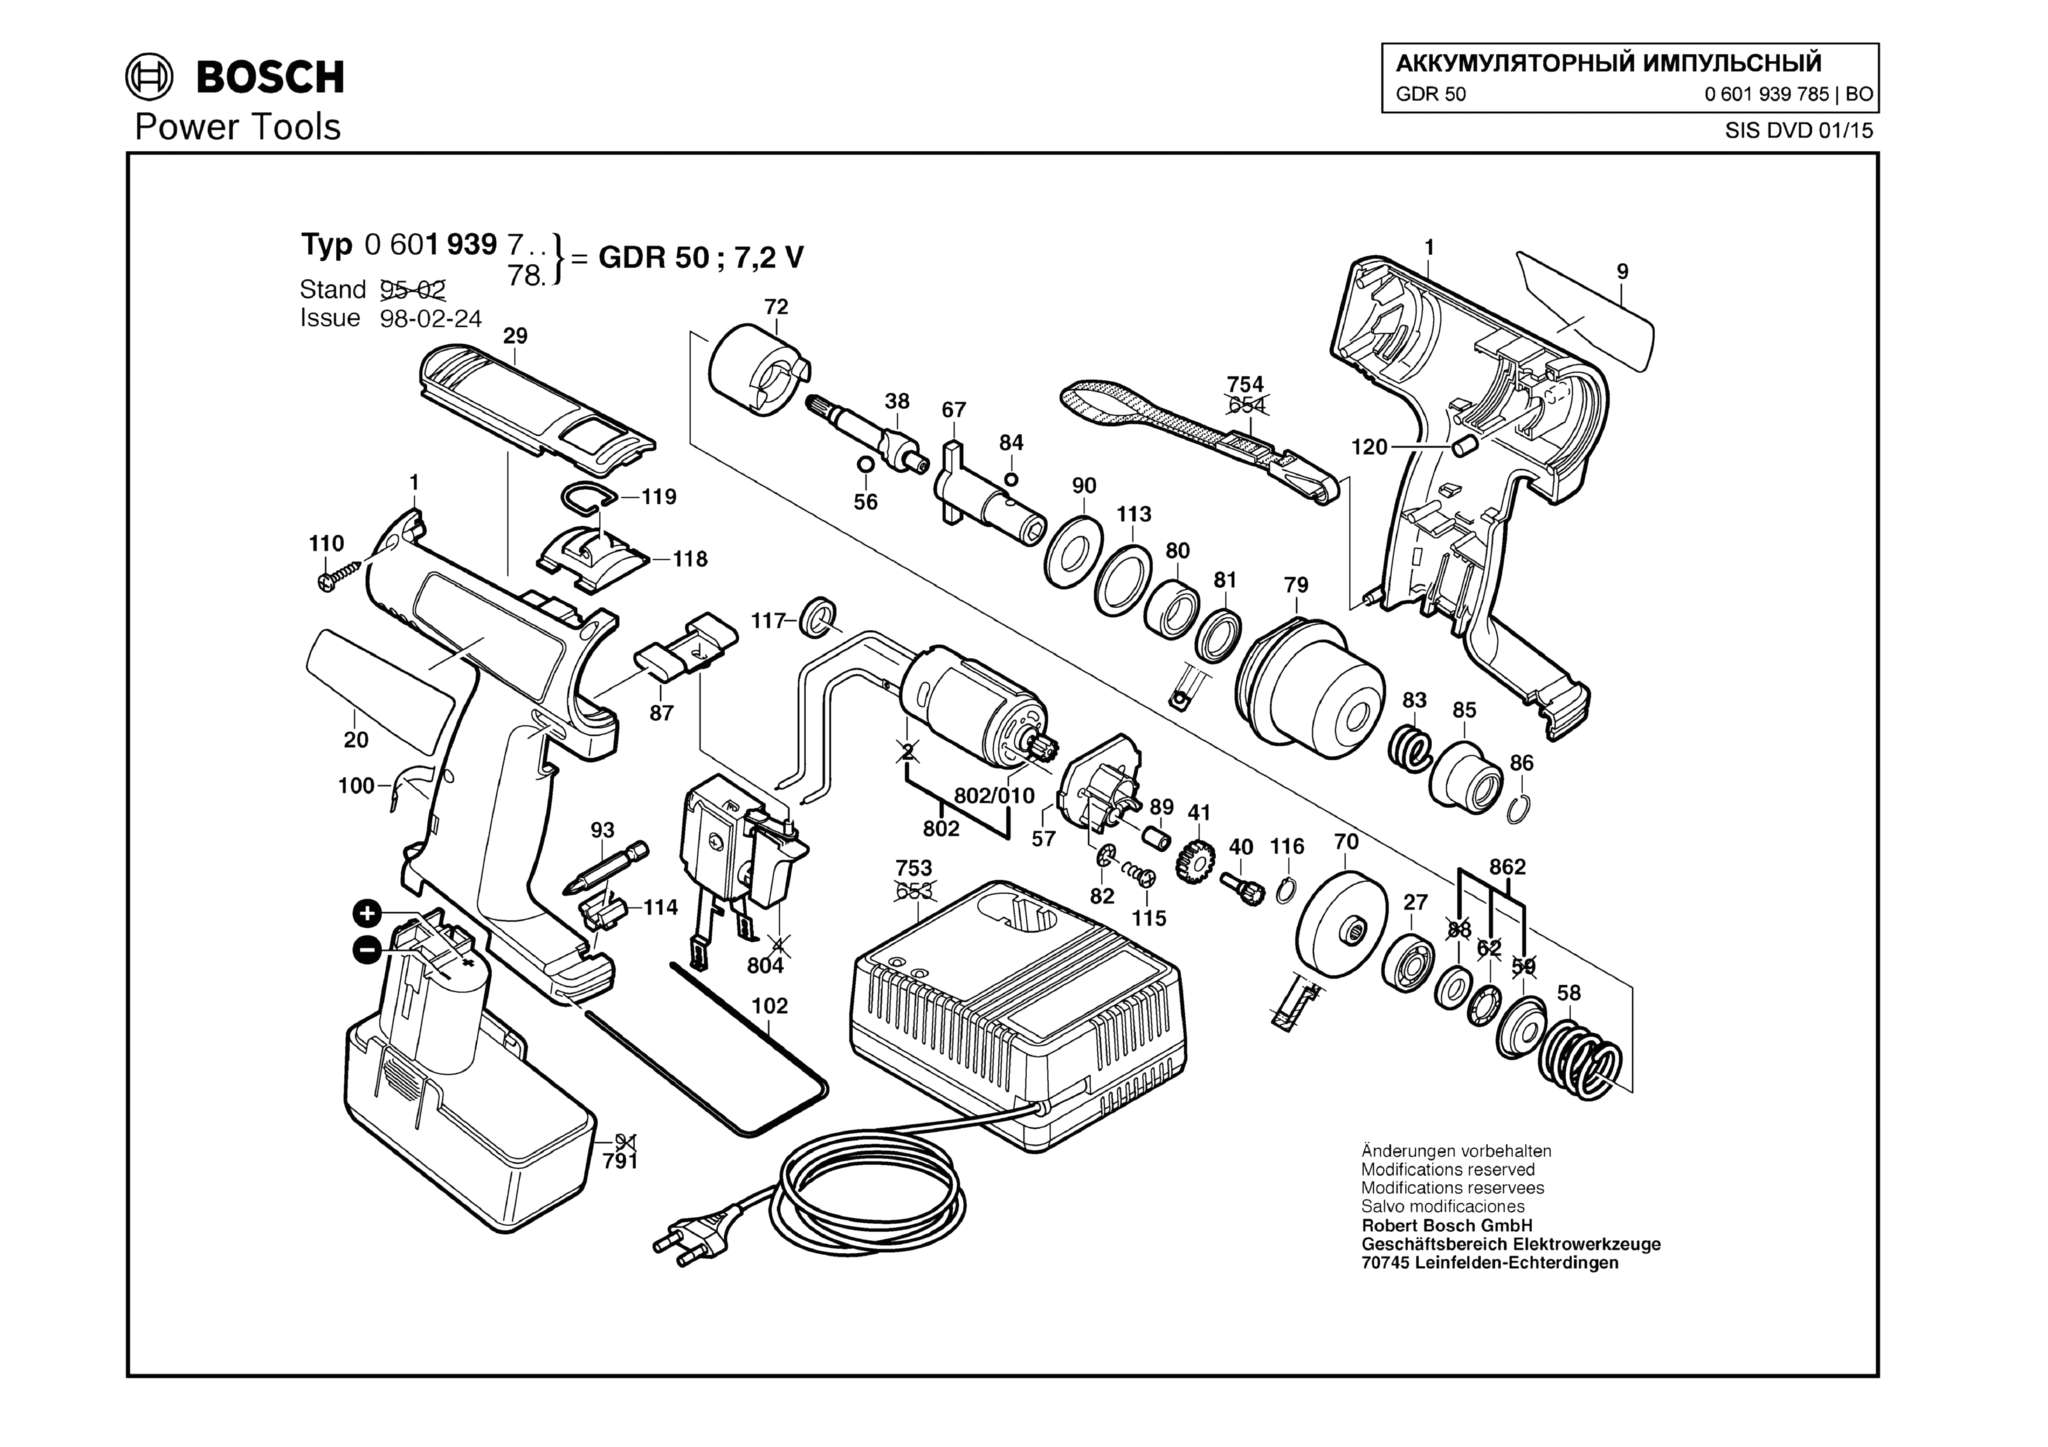 Запчасти, схема и деталировка Bosch GDR 50 (ТИП 0601939785)